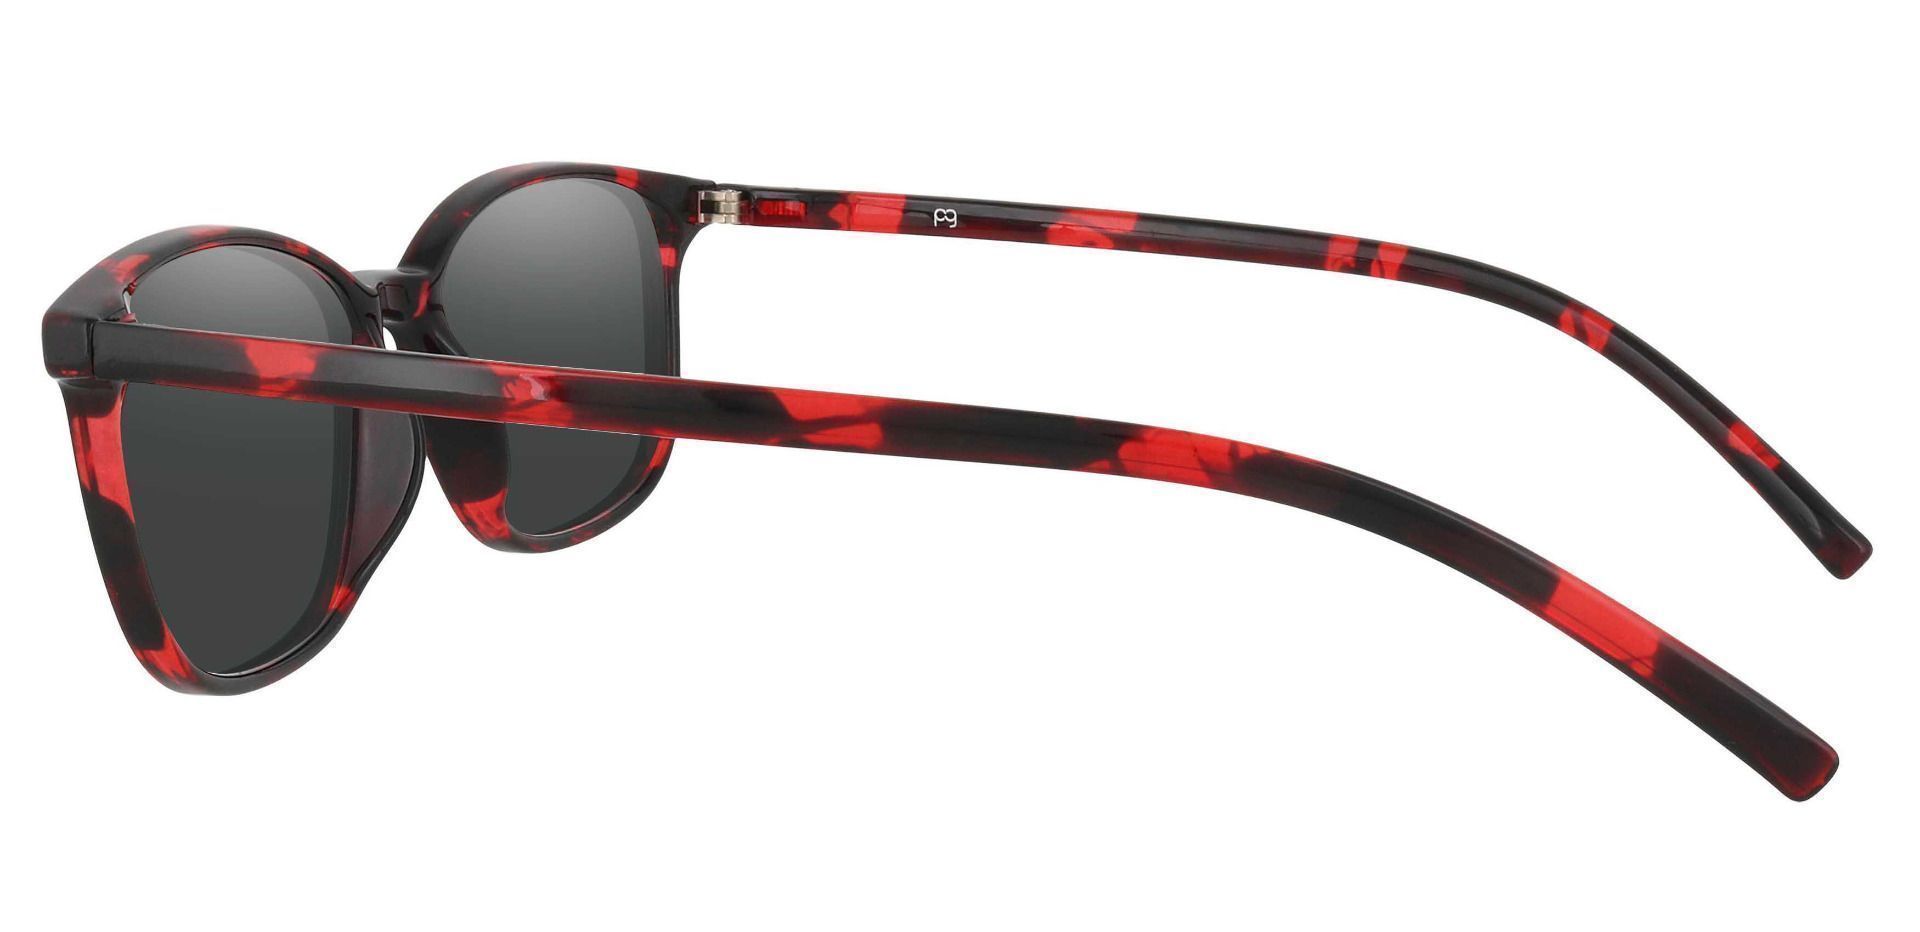 Onyx Square Prescription Sunglasses - Tortoise Frame With Gray Lenses